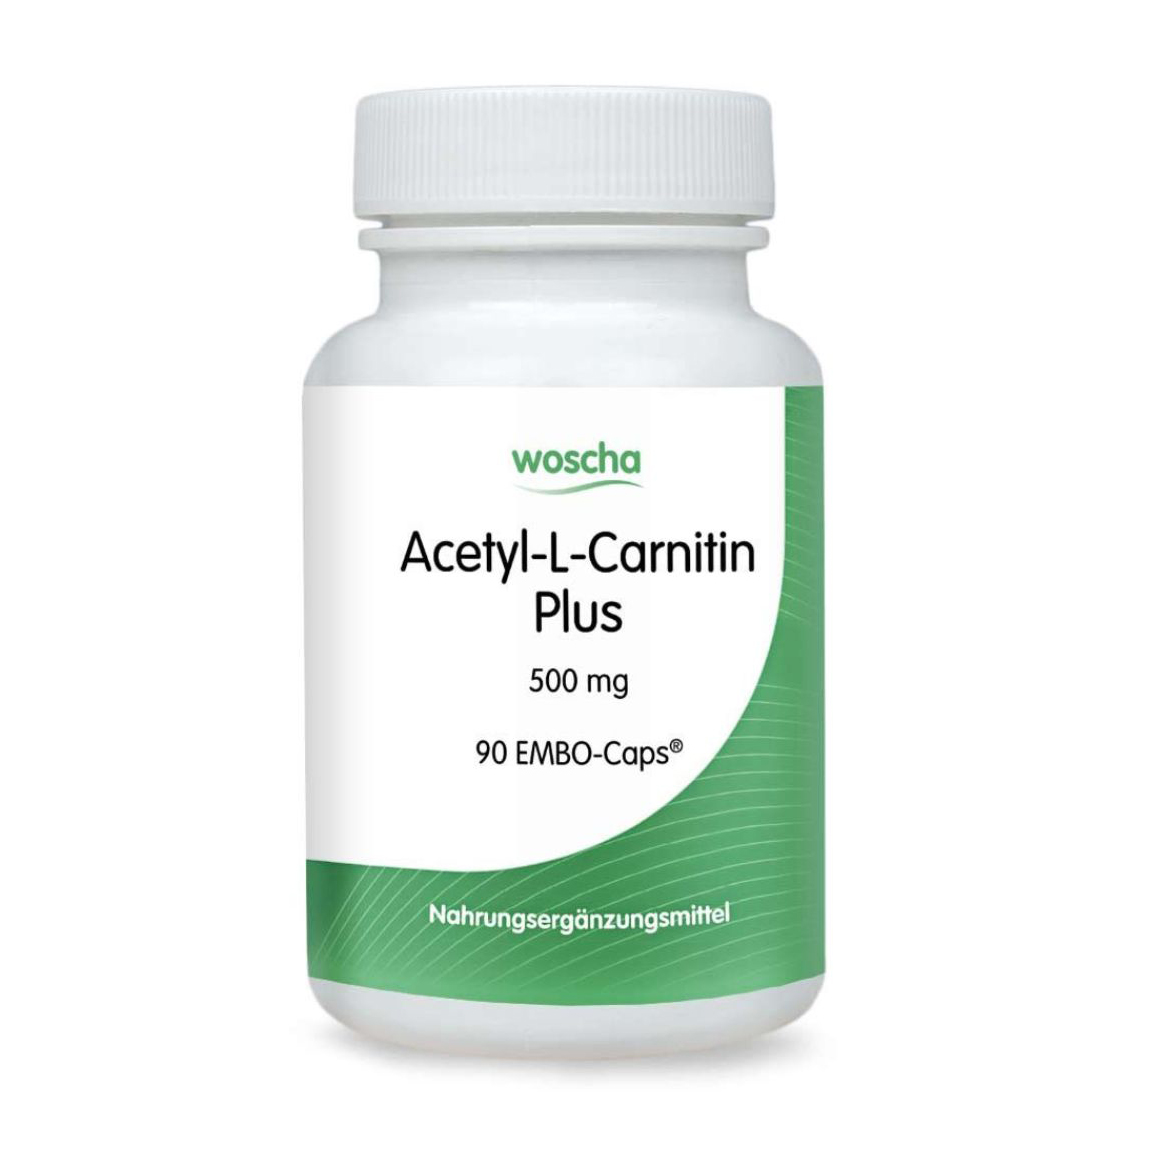 Acetyl-L-Carnitin Plus 500 mg, 90 EMBO-Caps